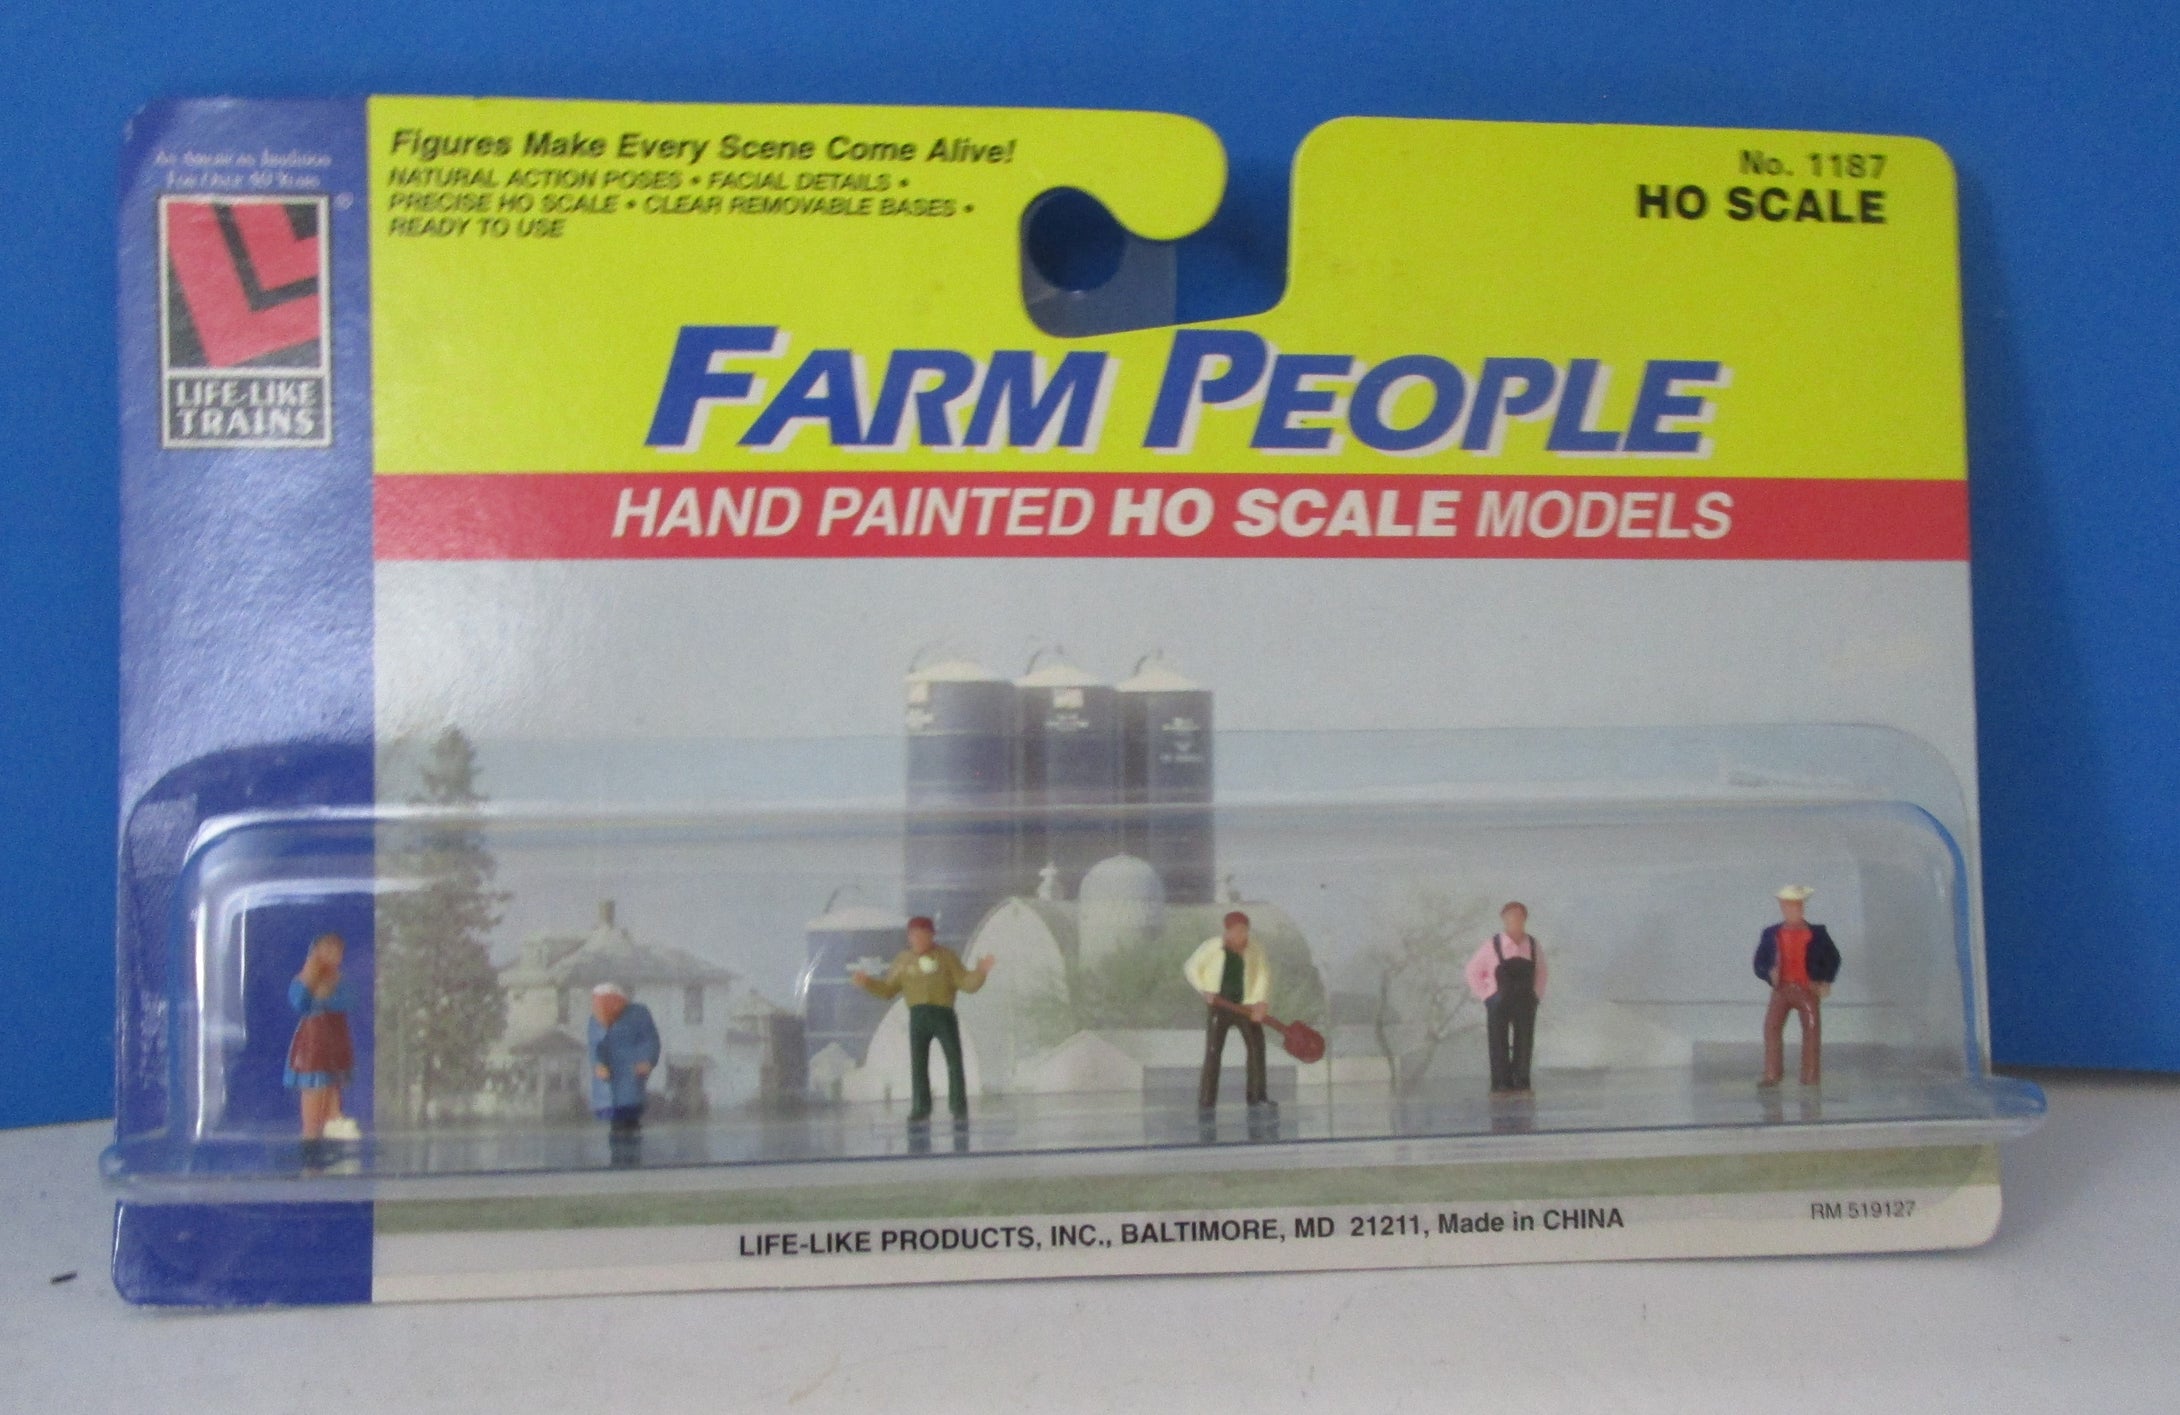 1187 Life Like Trains Farm People, hand painted